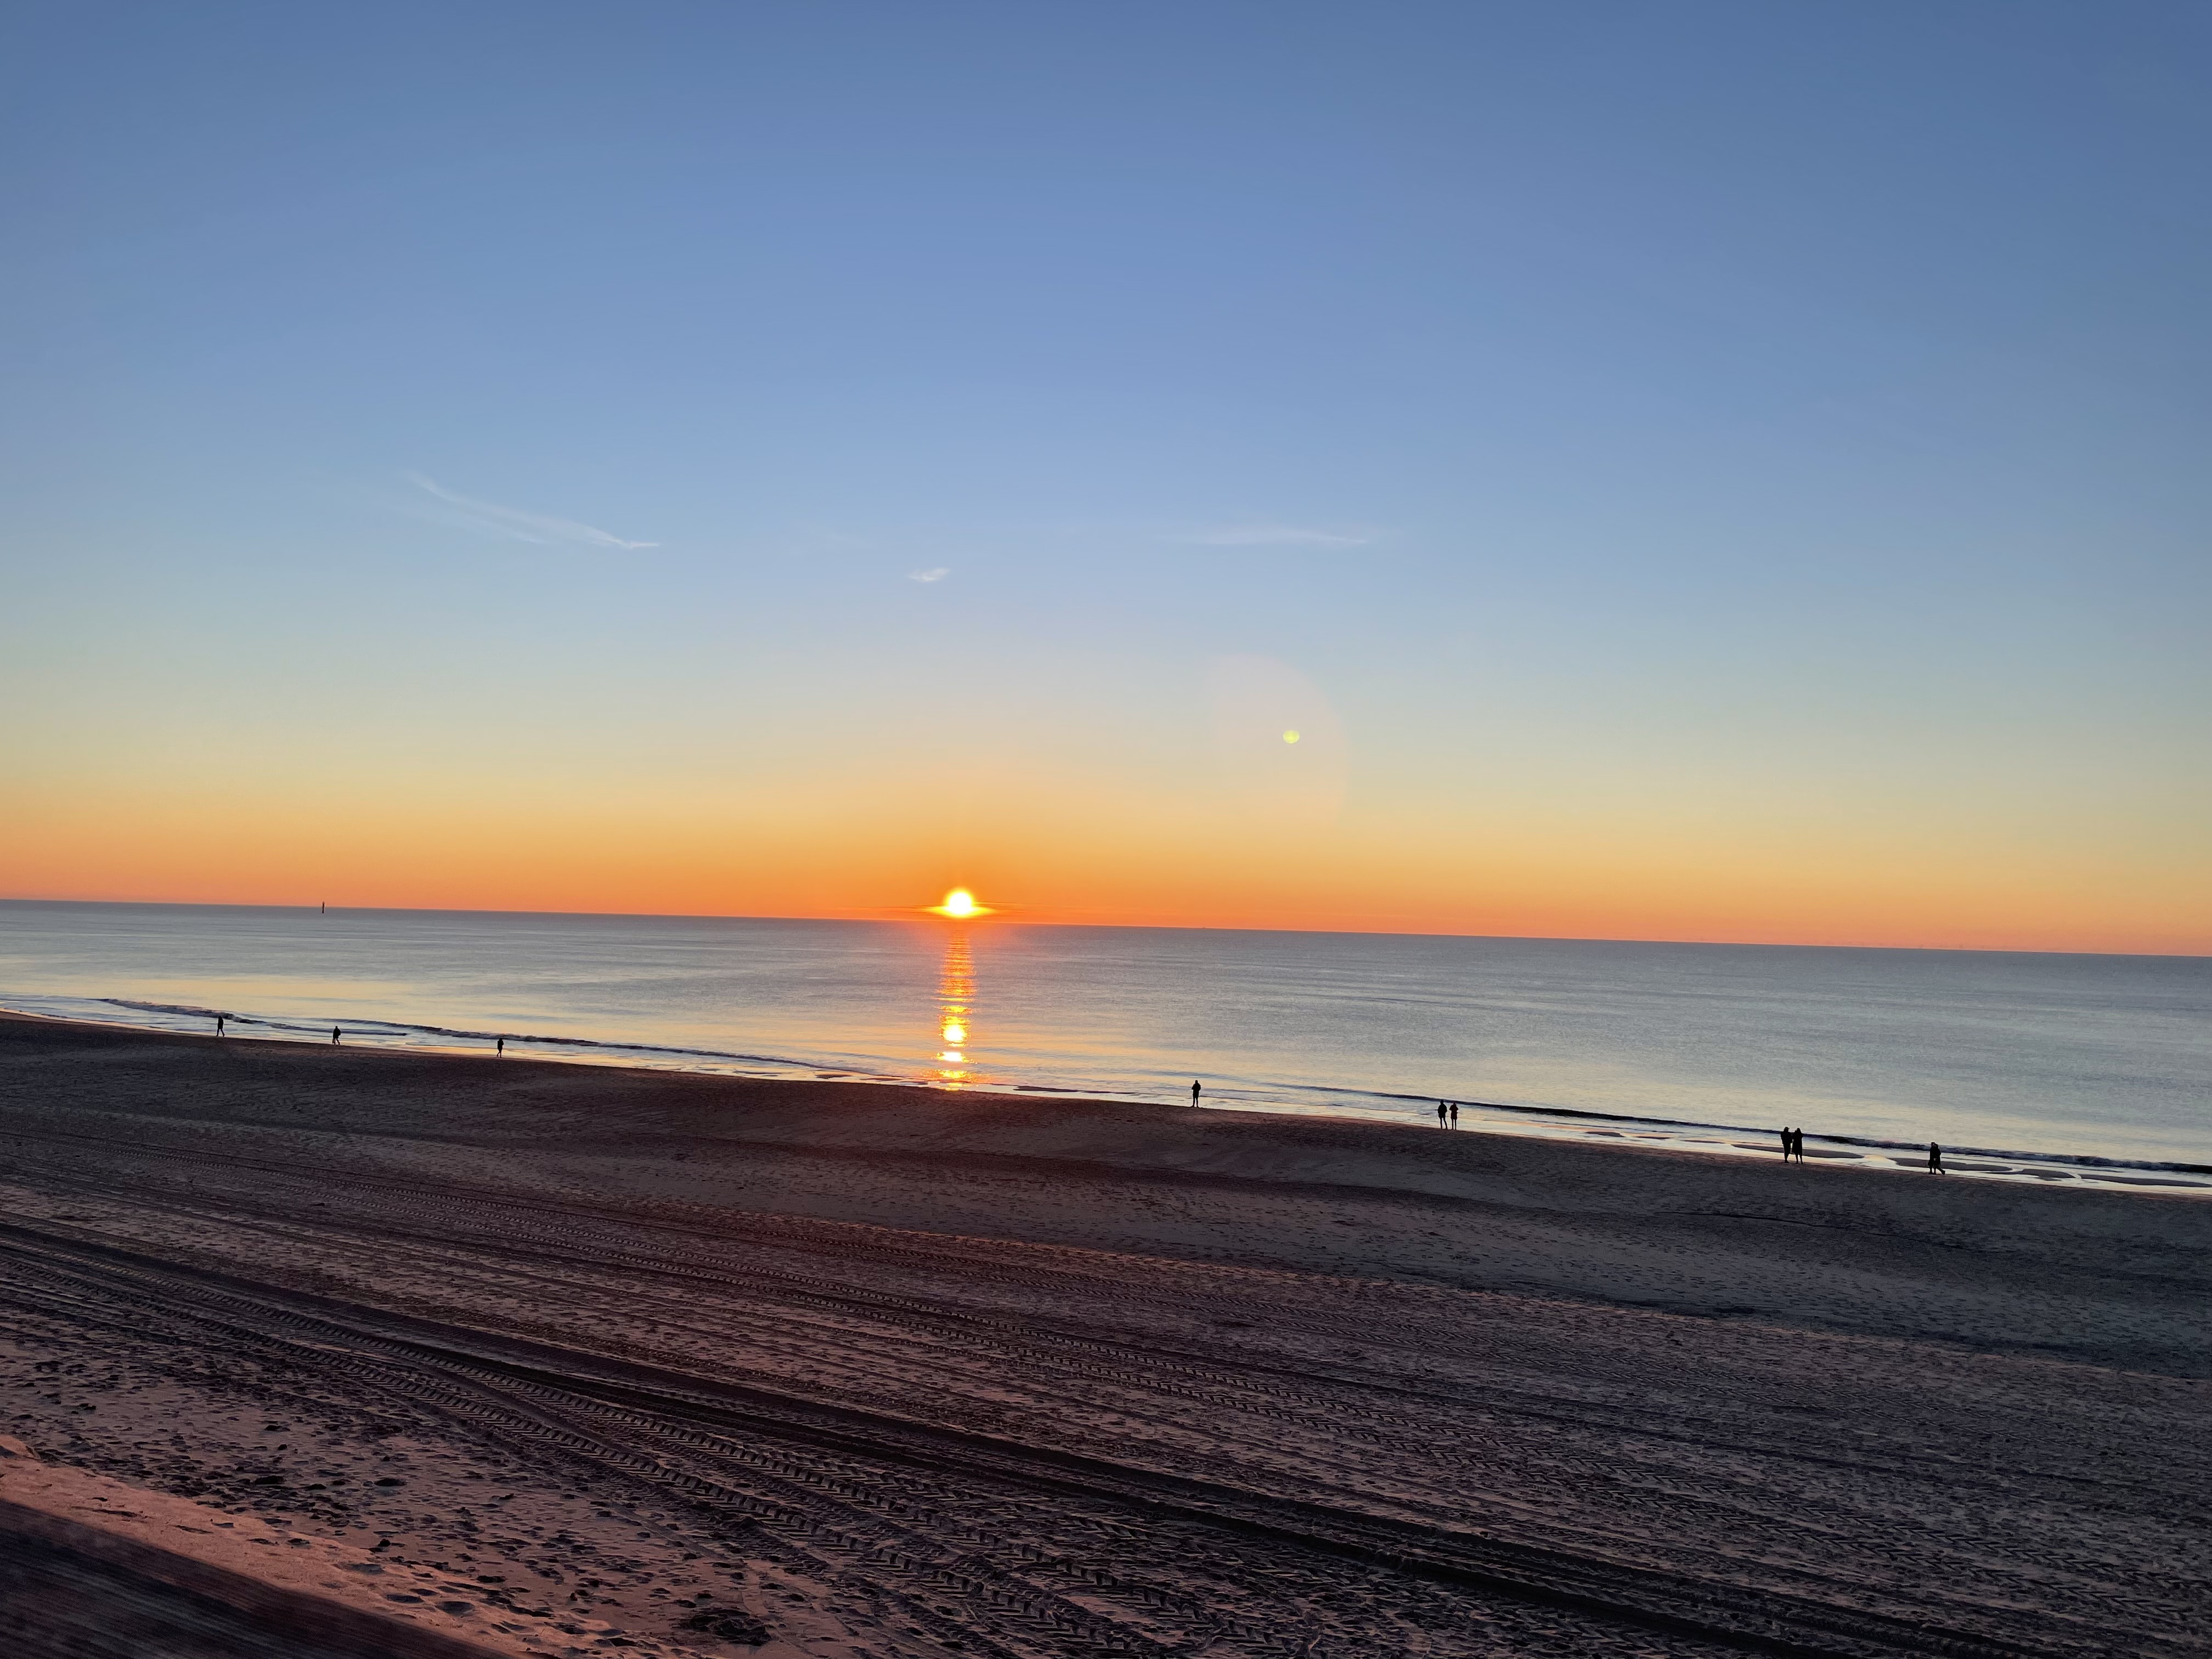 MEMOMED - Fortbildung auf Sylt - Sonnenaufgang am Strand